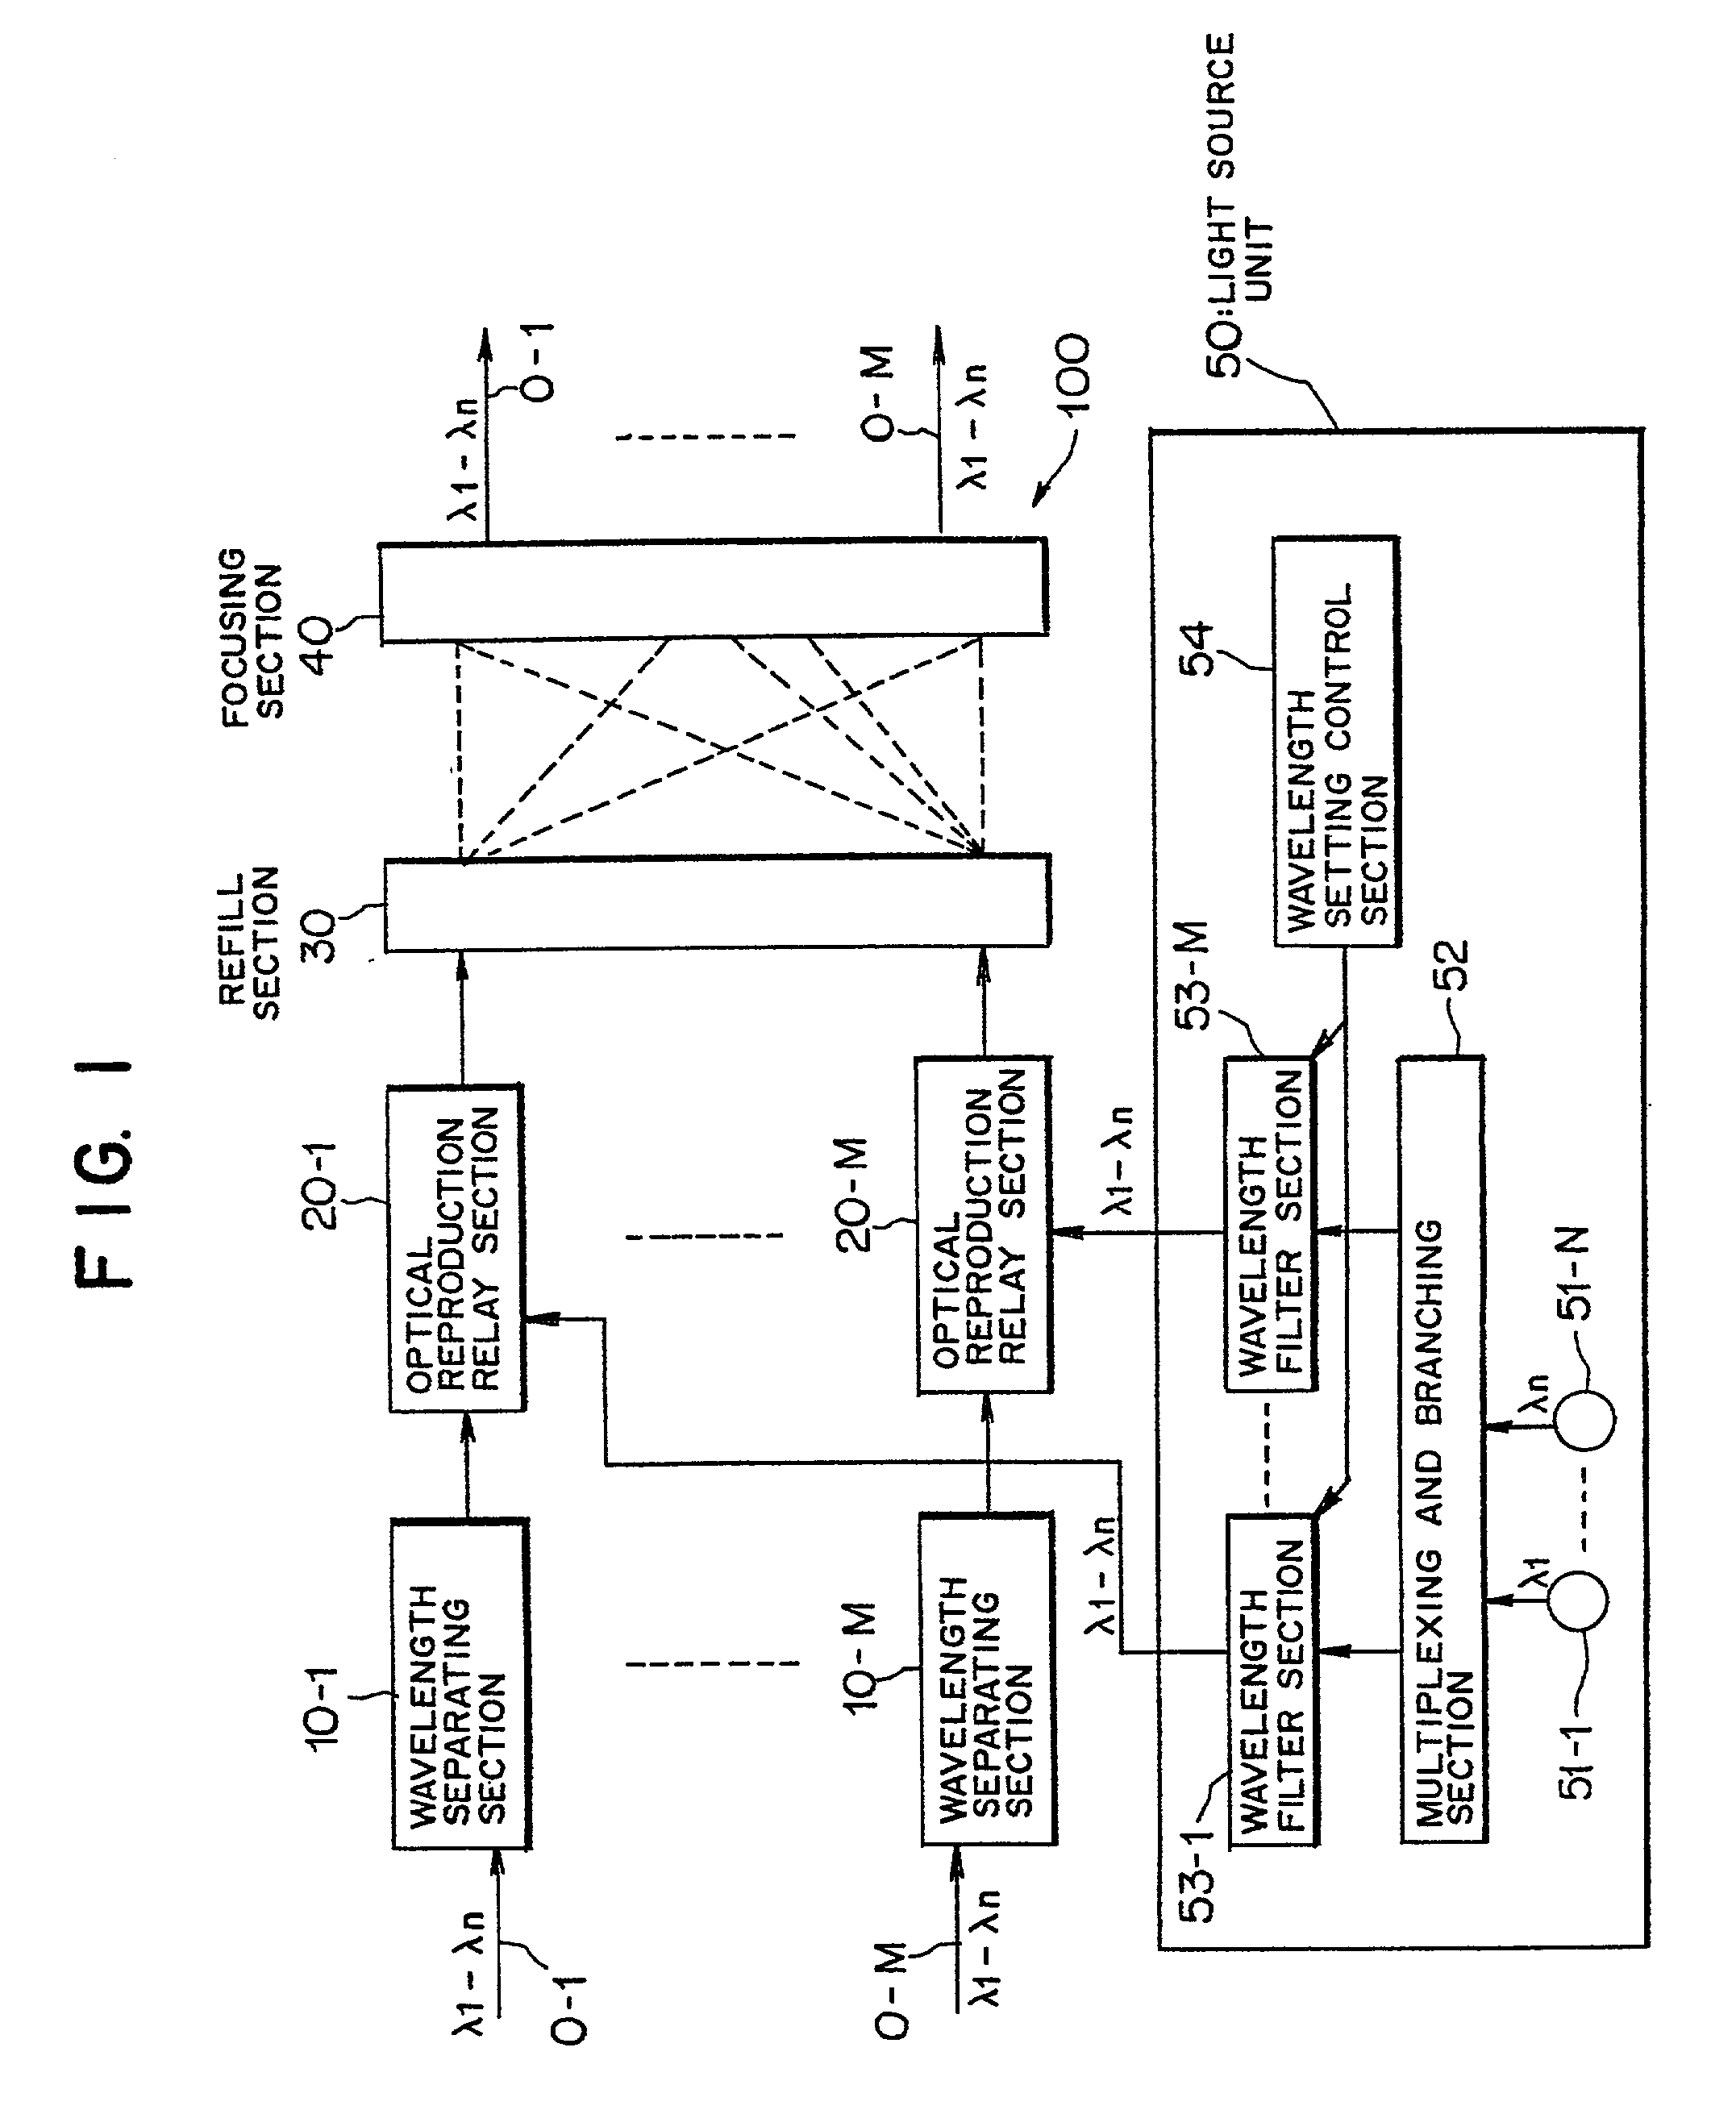 Optical cross connect unit, optical add-drop multiplexer, light source unit, and adding unit